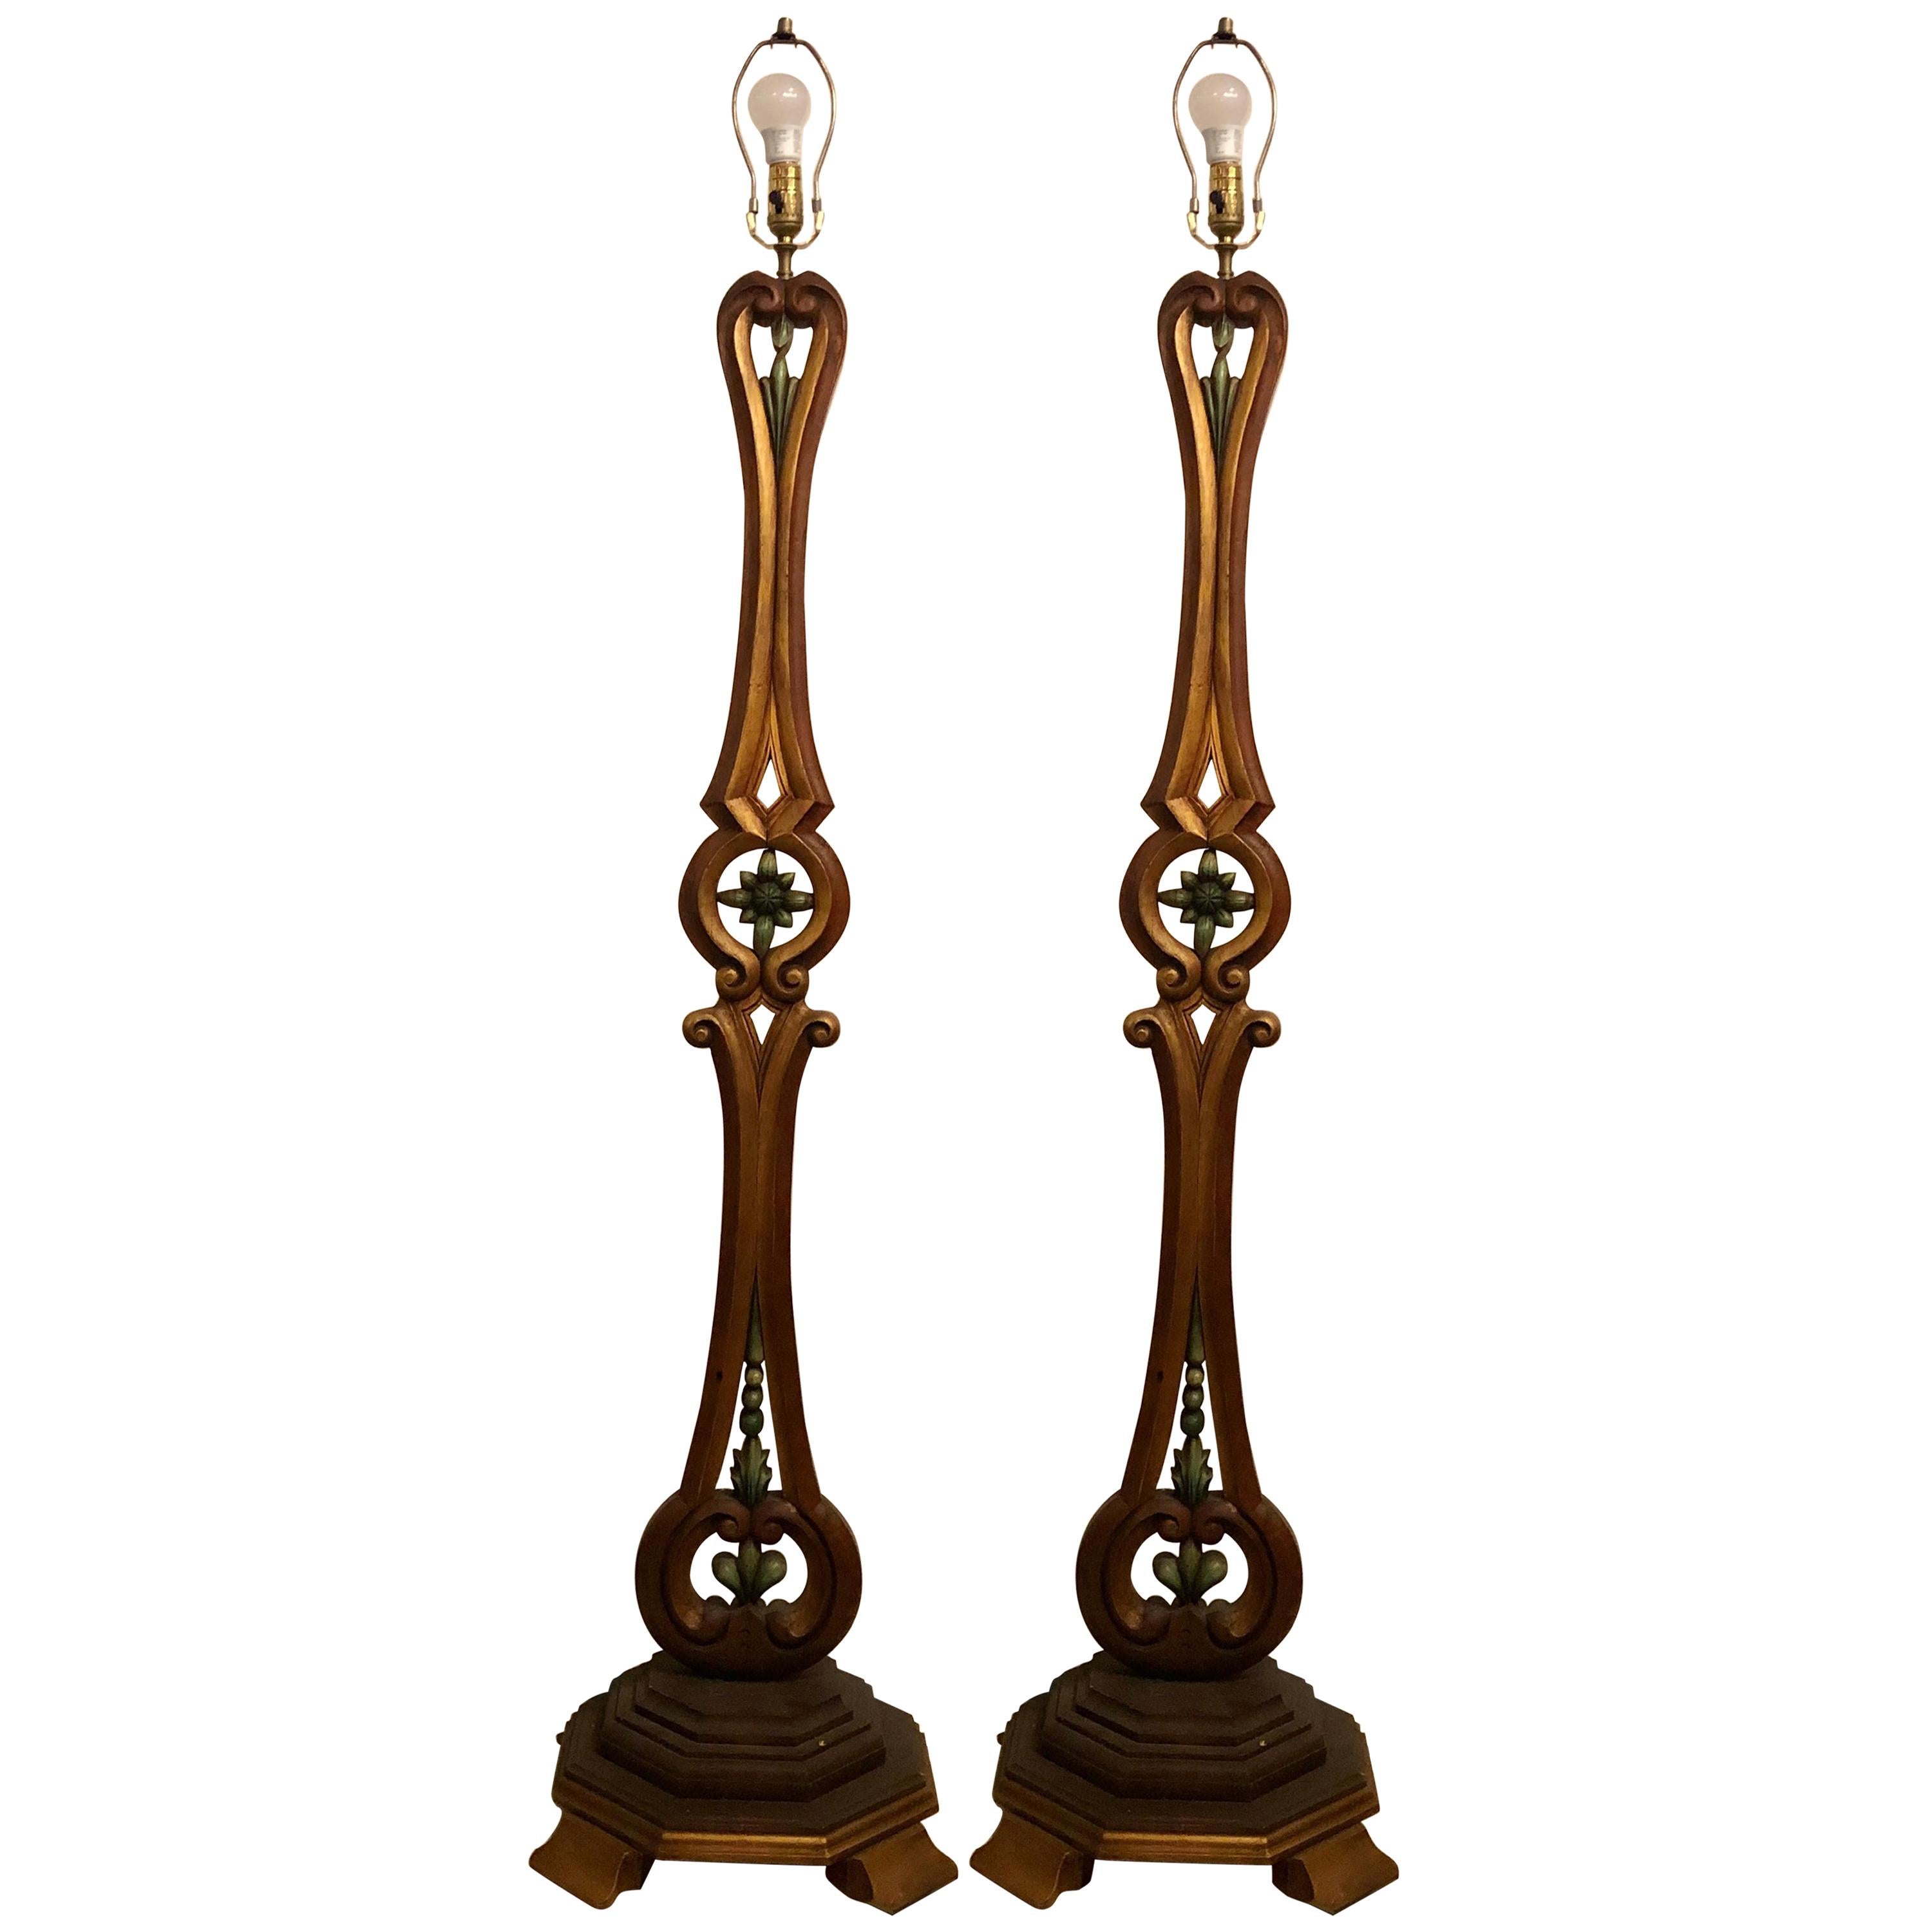 Pair of Tall Standing Venetian Style Floor Lamps